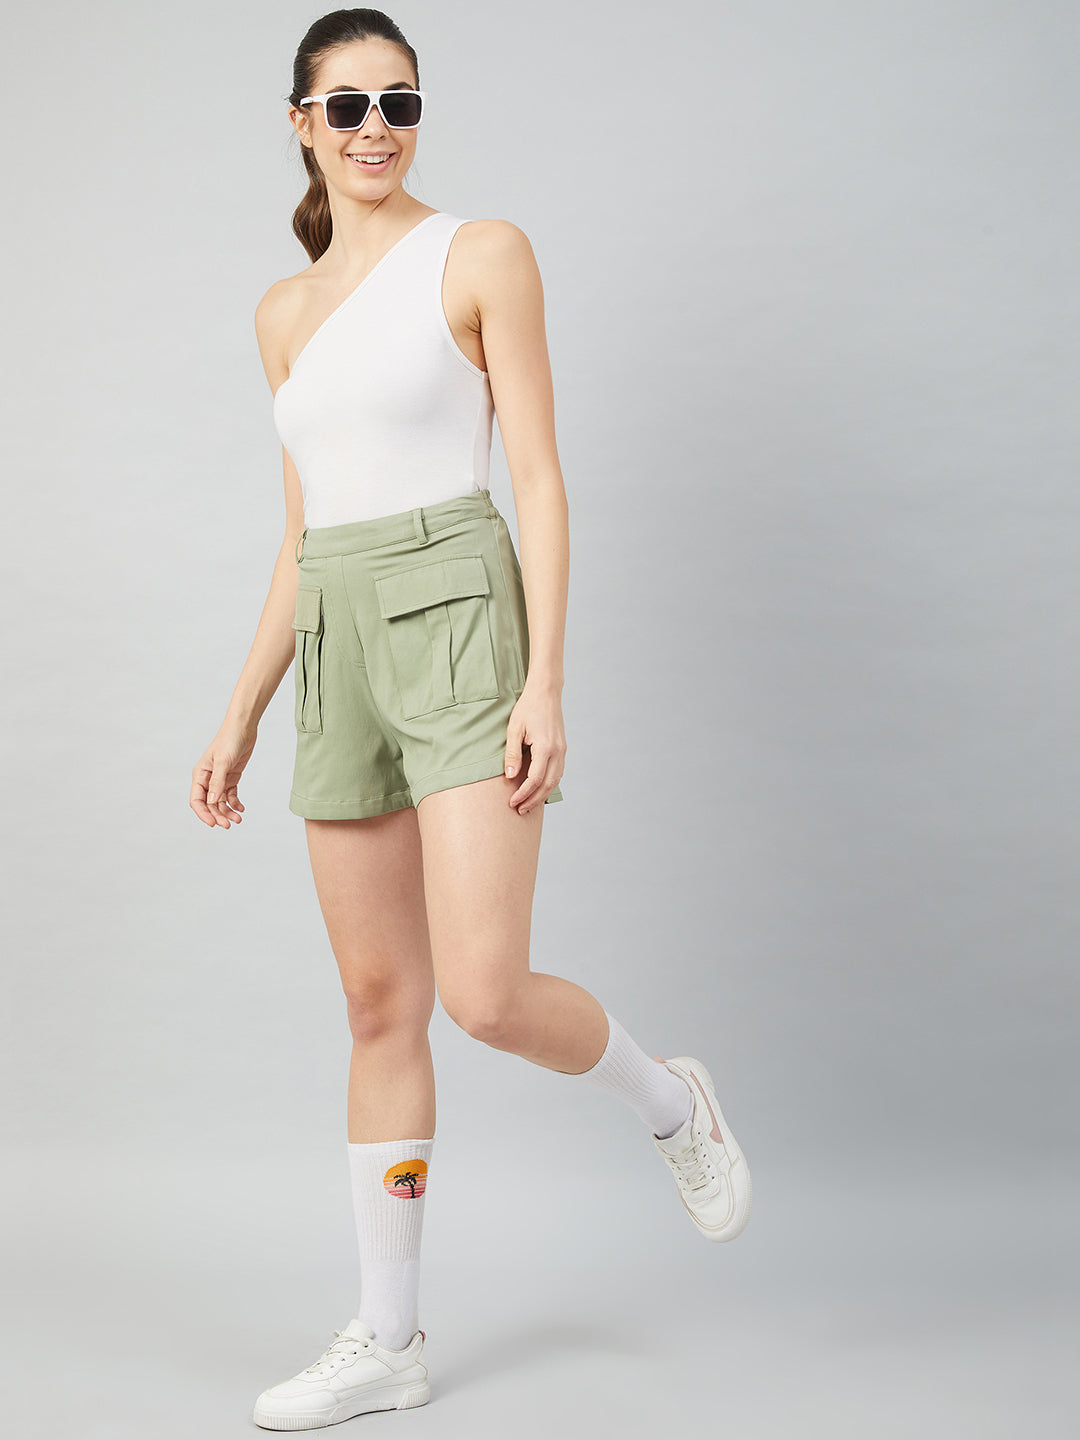 Athena Women Sea Green Solid Regular Fit Regular Shorts - Athena Lifestyle